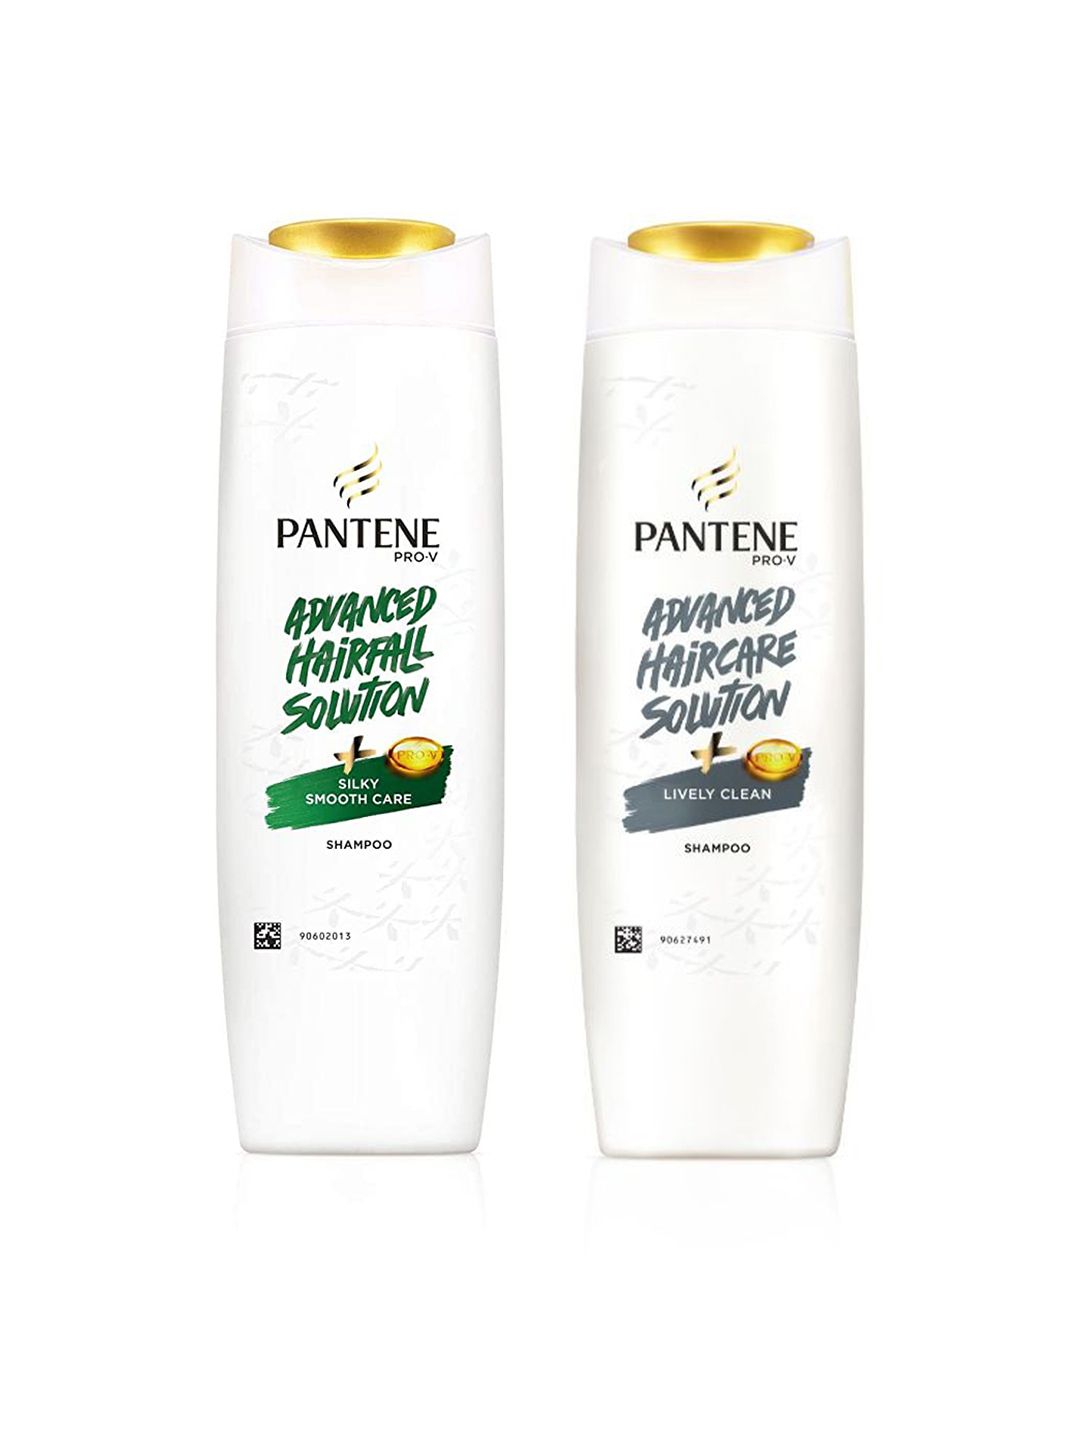 Pantene Set of 2 Shampoos Price in India